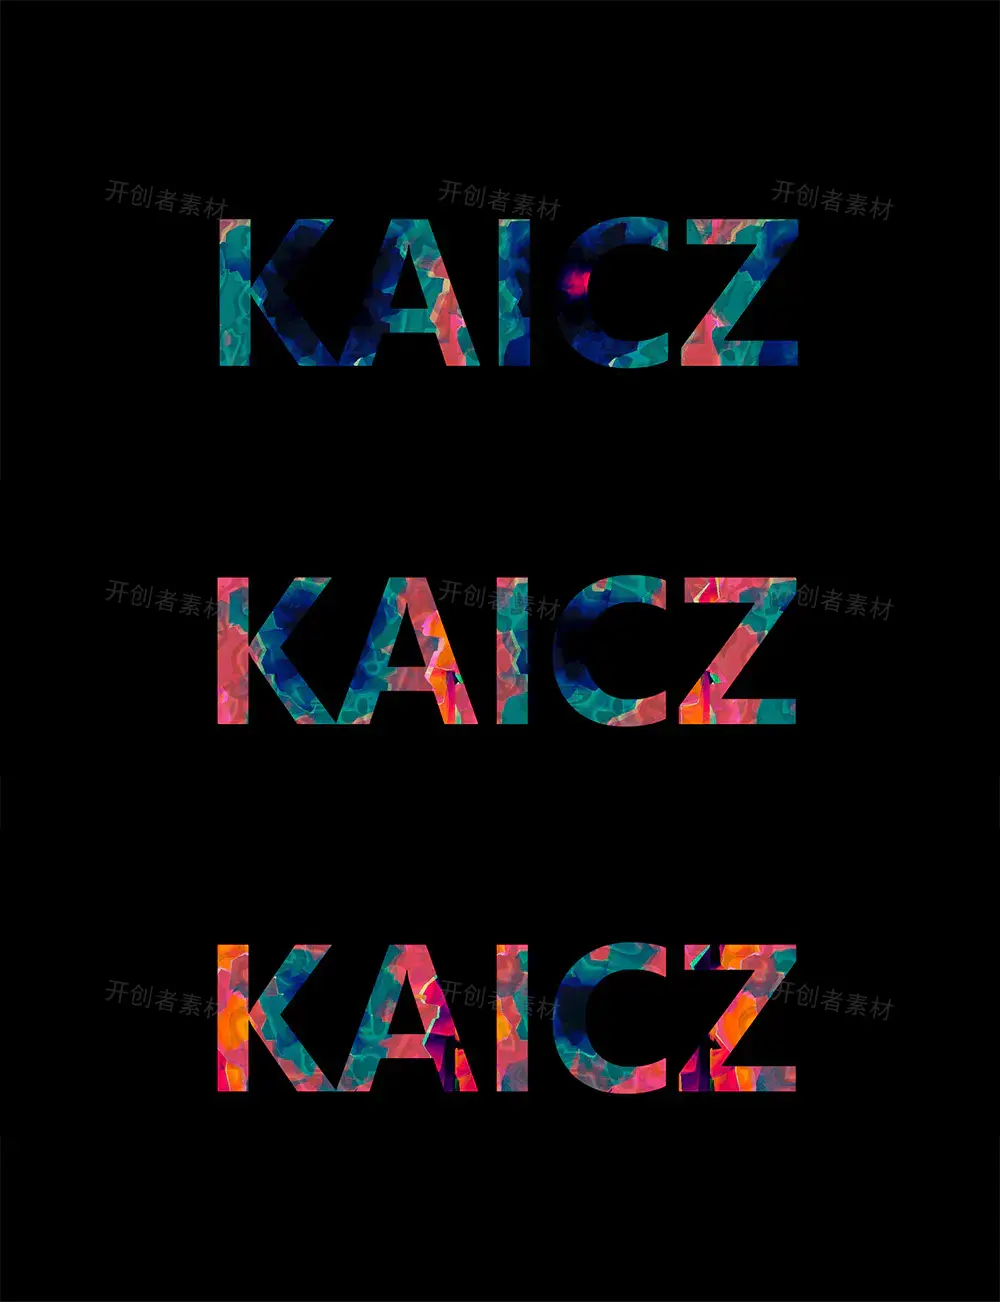 KAICZ随机变化的彩色文字背景动画特效